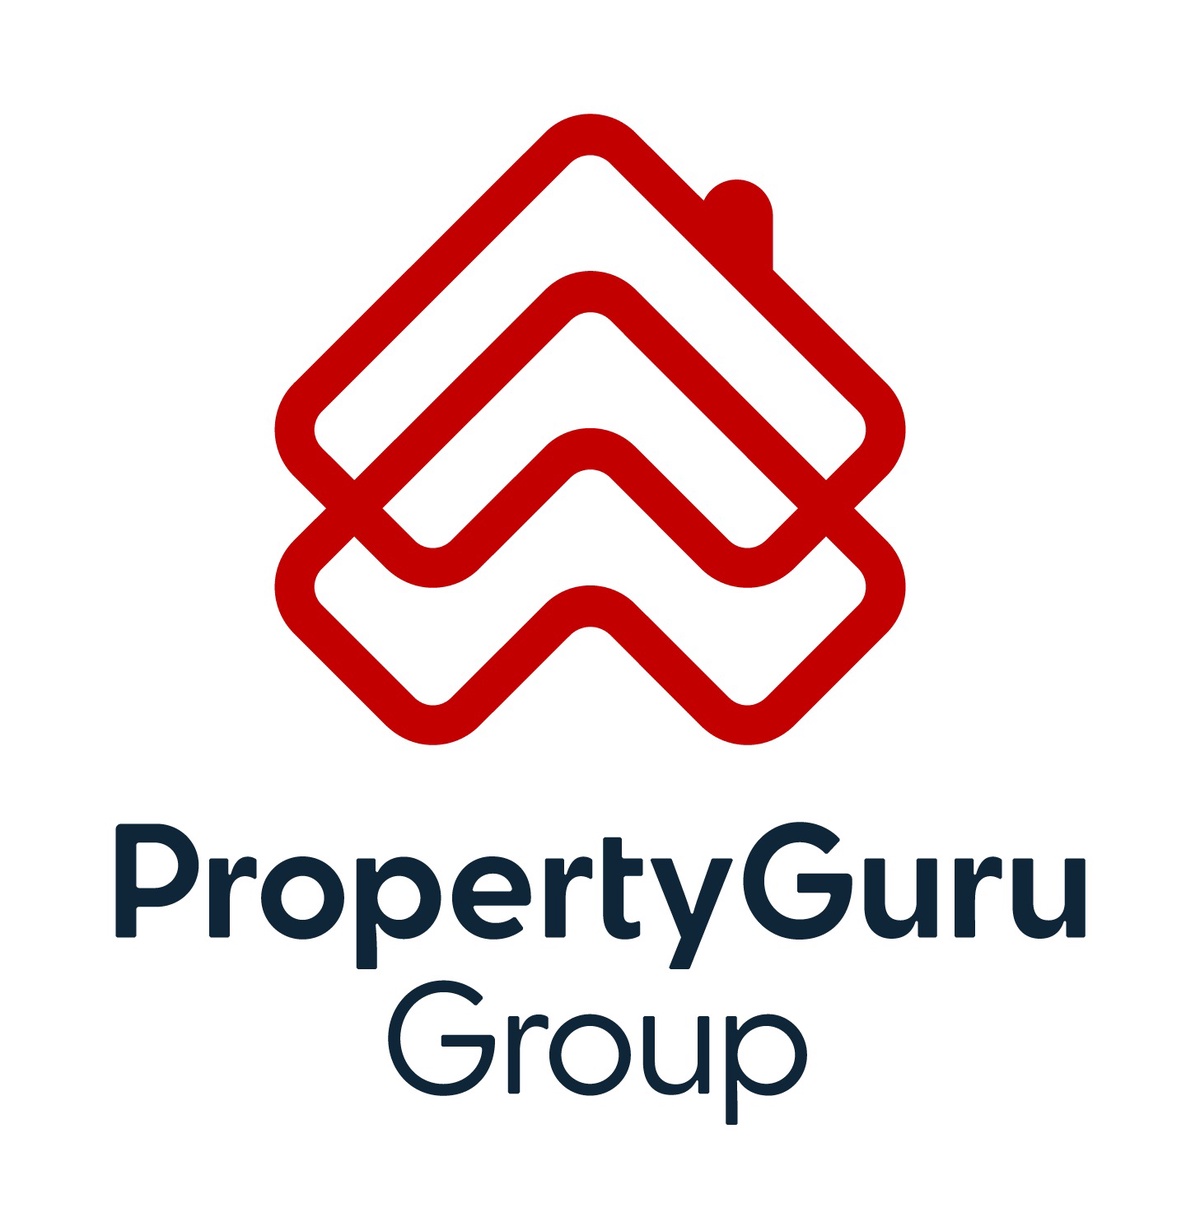 PropertyGuru appoints Disha Goenka Das as Chief Marketing Officer